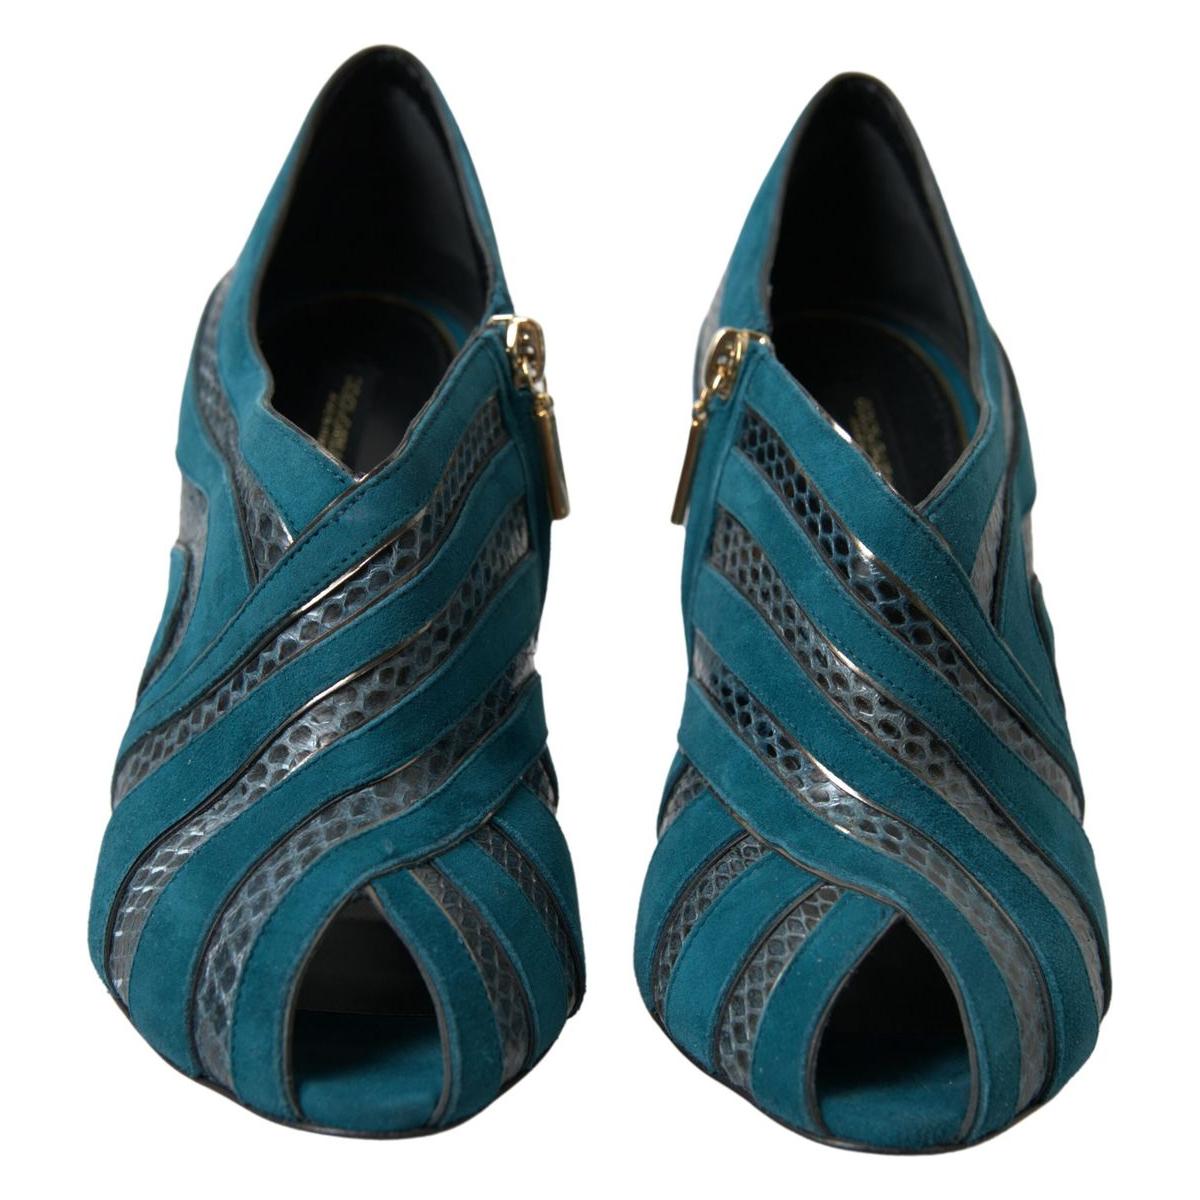 Dolce & Gabbana Chic Blue Peep Toe Stiletto Ankle Booties blue-teal-snakeskin-peep-toe-ankle-booties-shoes 465A8805-scaled-b9891508-9b1_1ad37581-1b19-4028-b2e3-fe7e7450e9ab.jpg